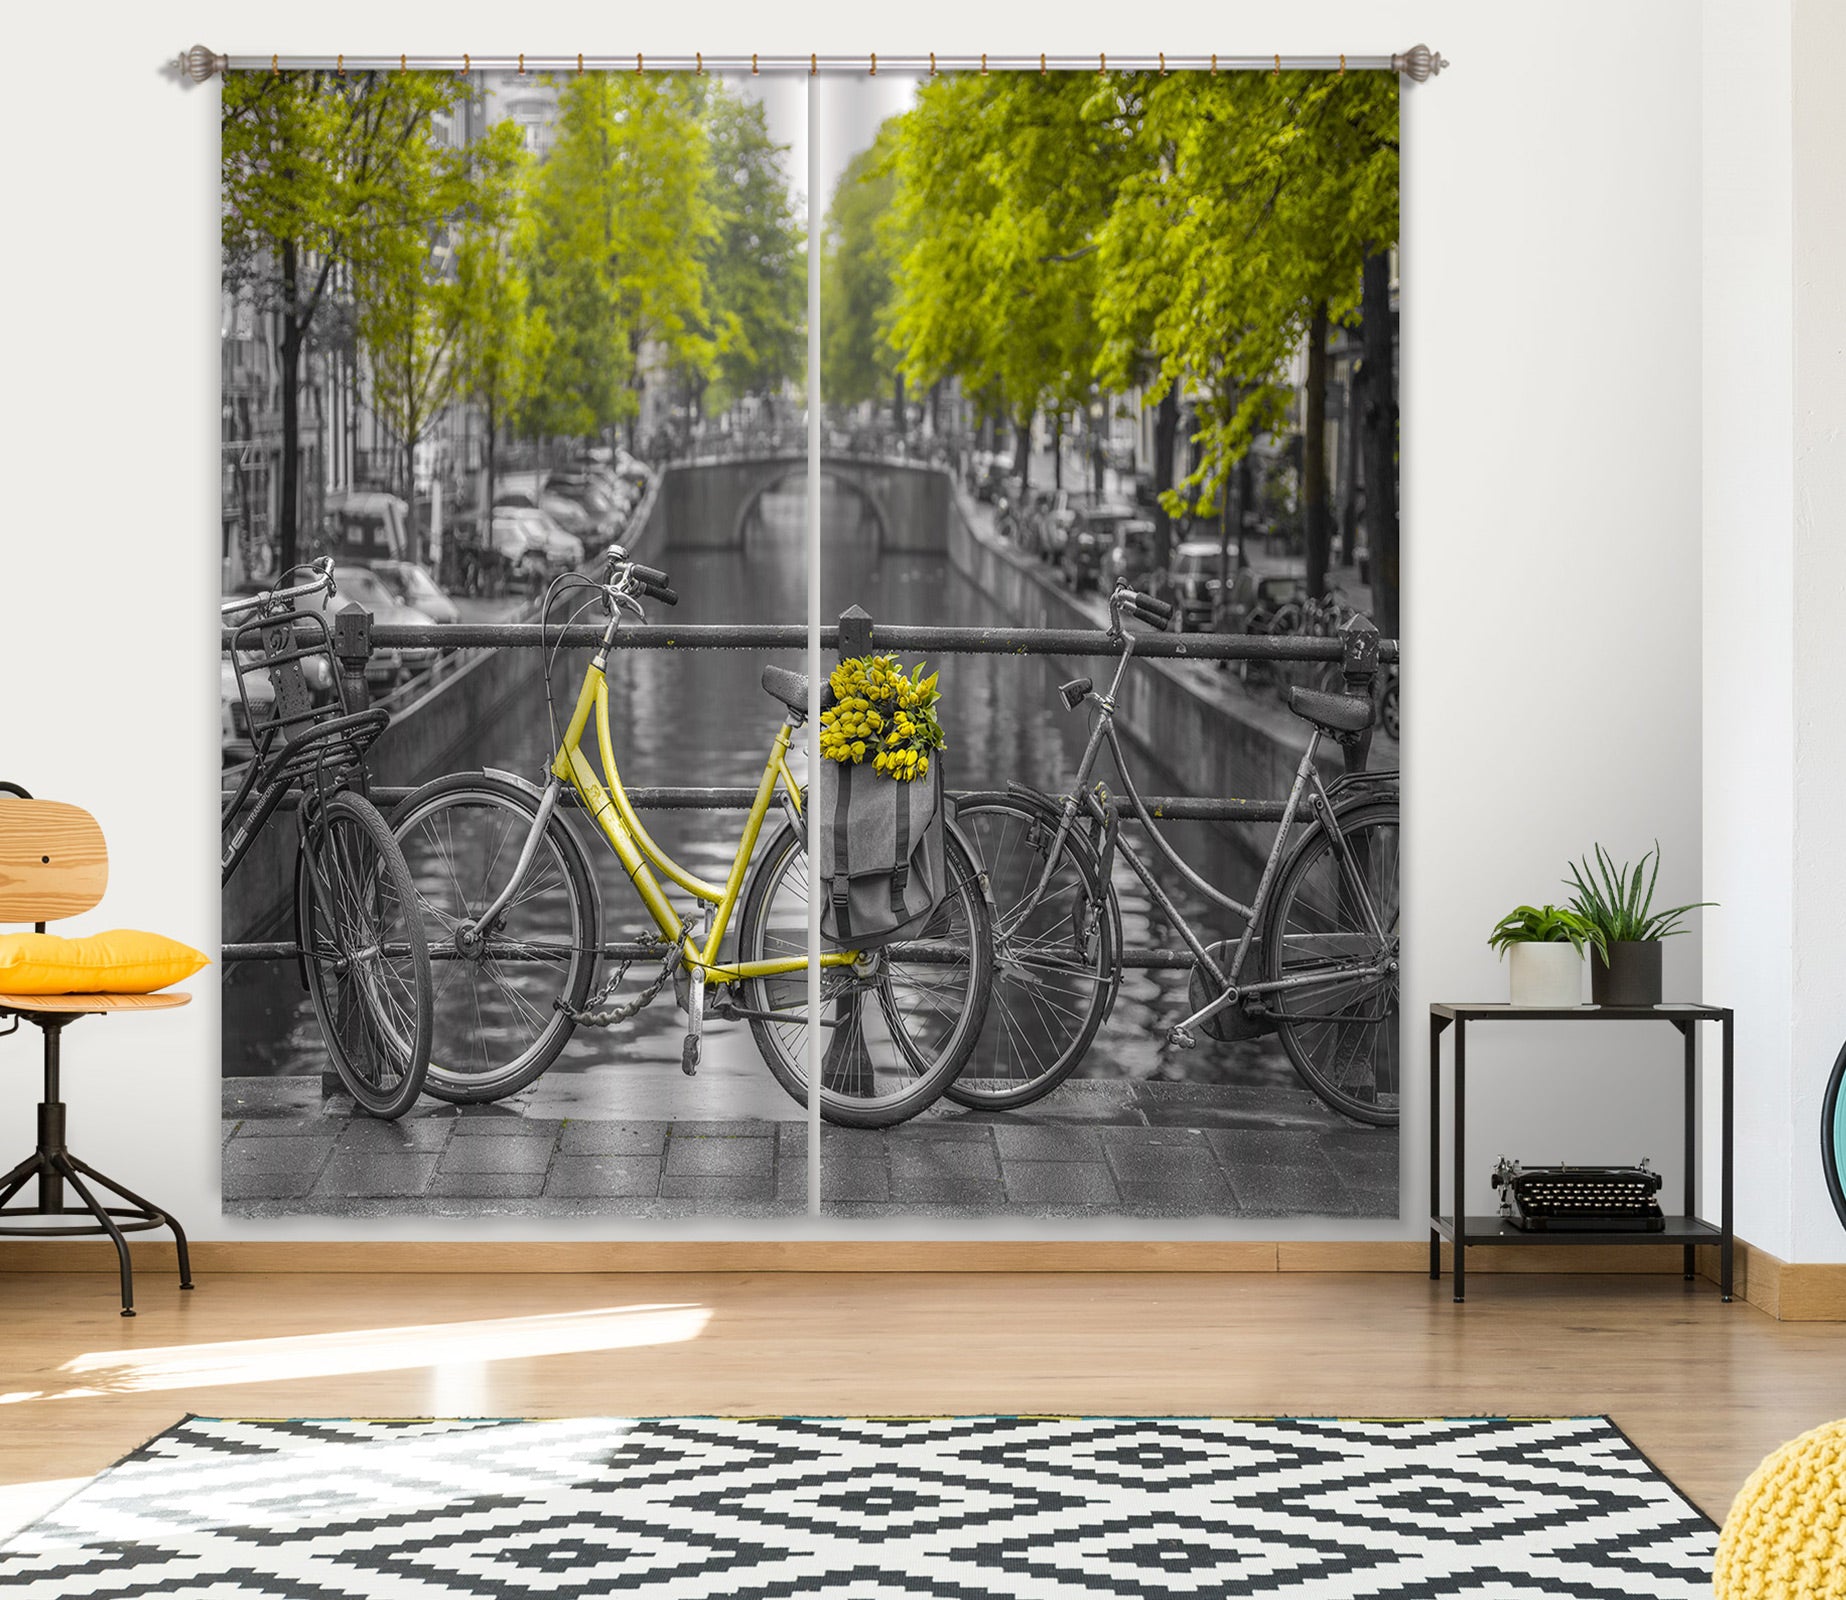 3D Bike River 035 Assaf Frank Curtain Curtains Drapes